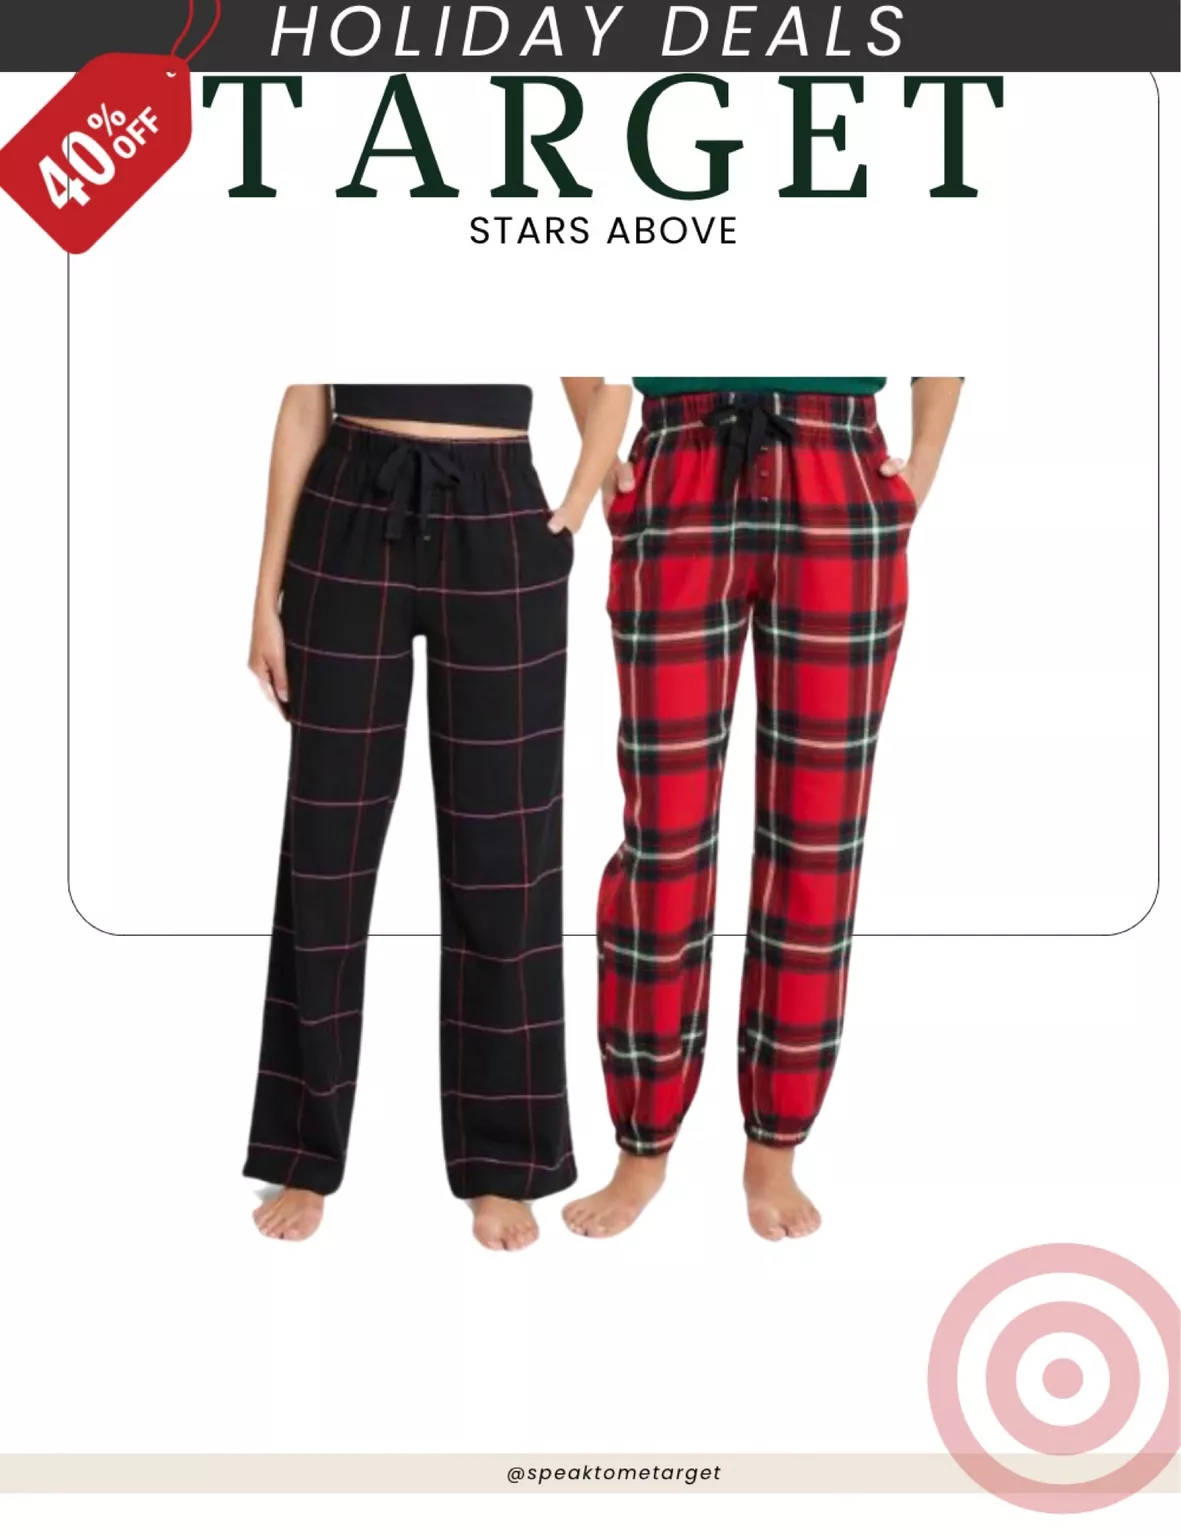 Red Plaid Pajama Pants : Target